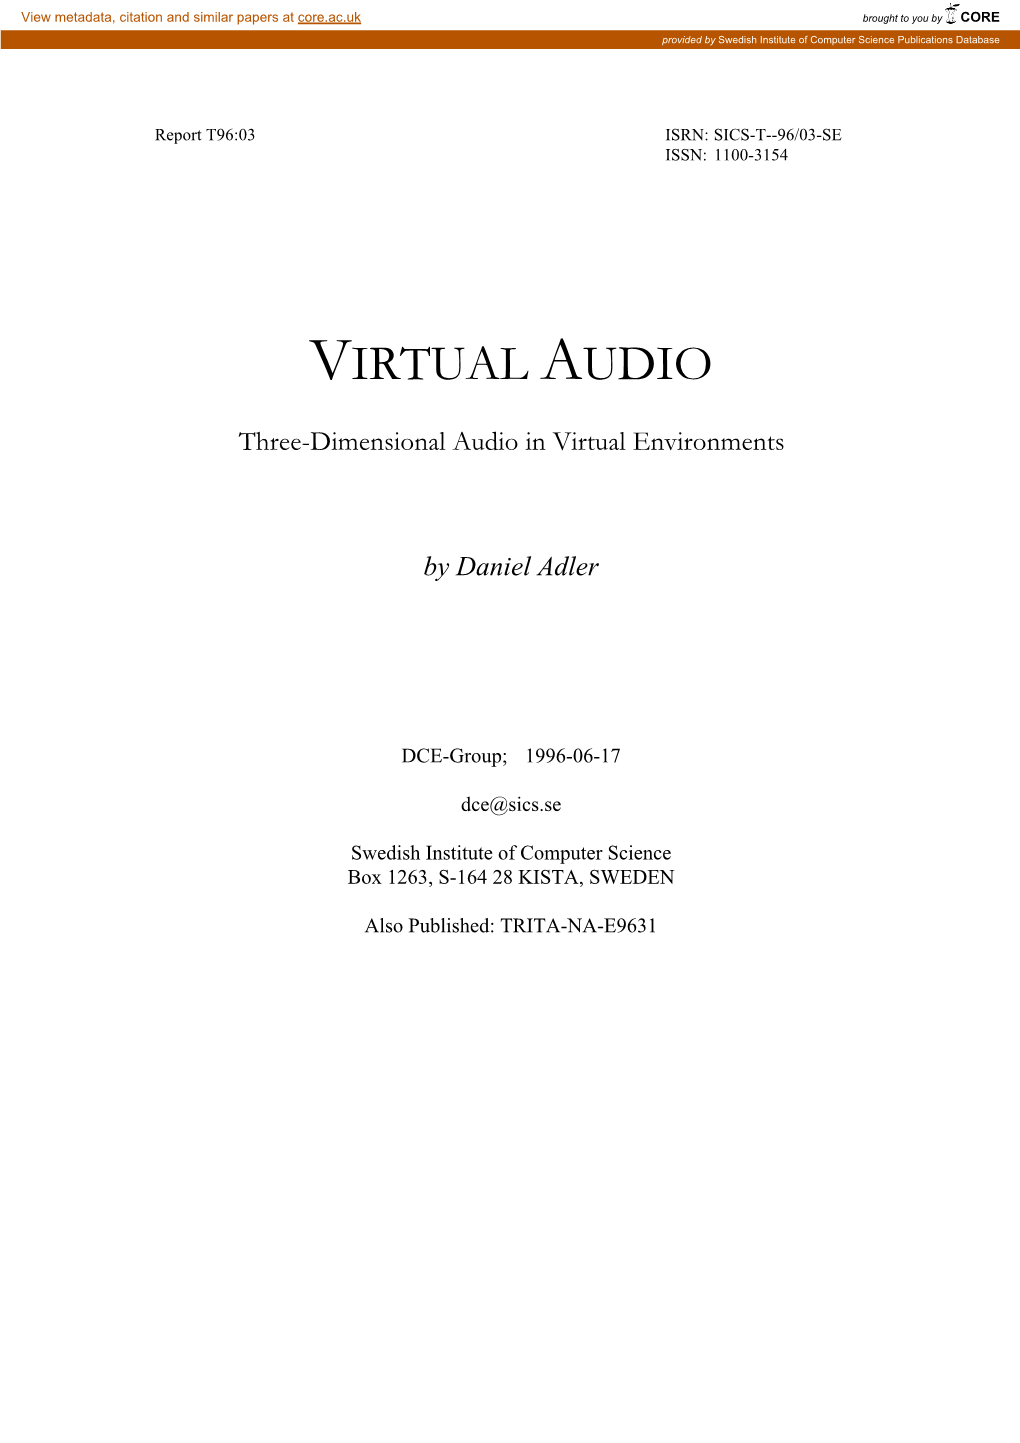 Virtual Audio